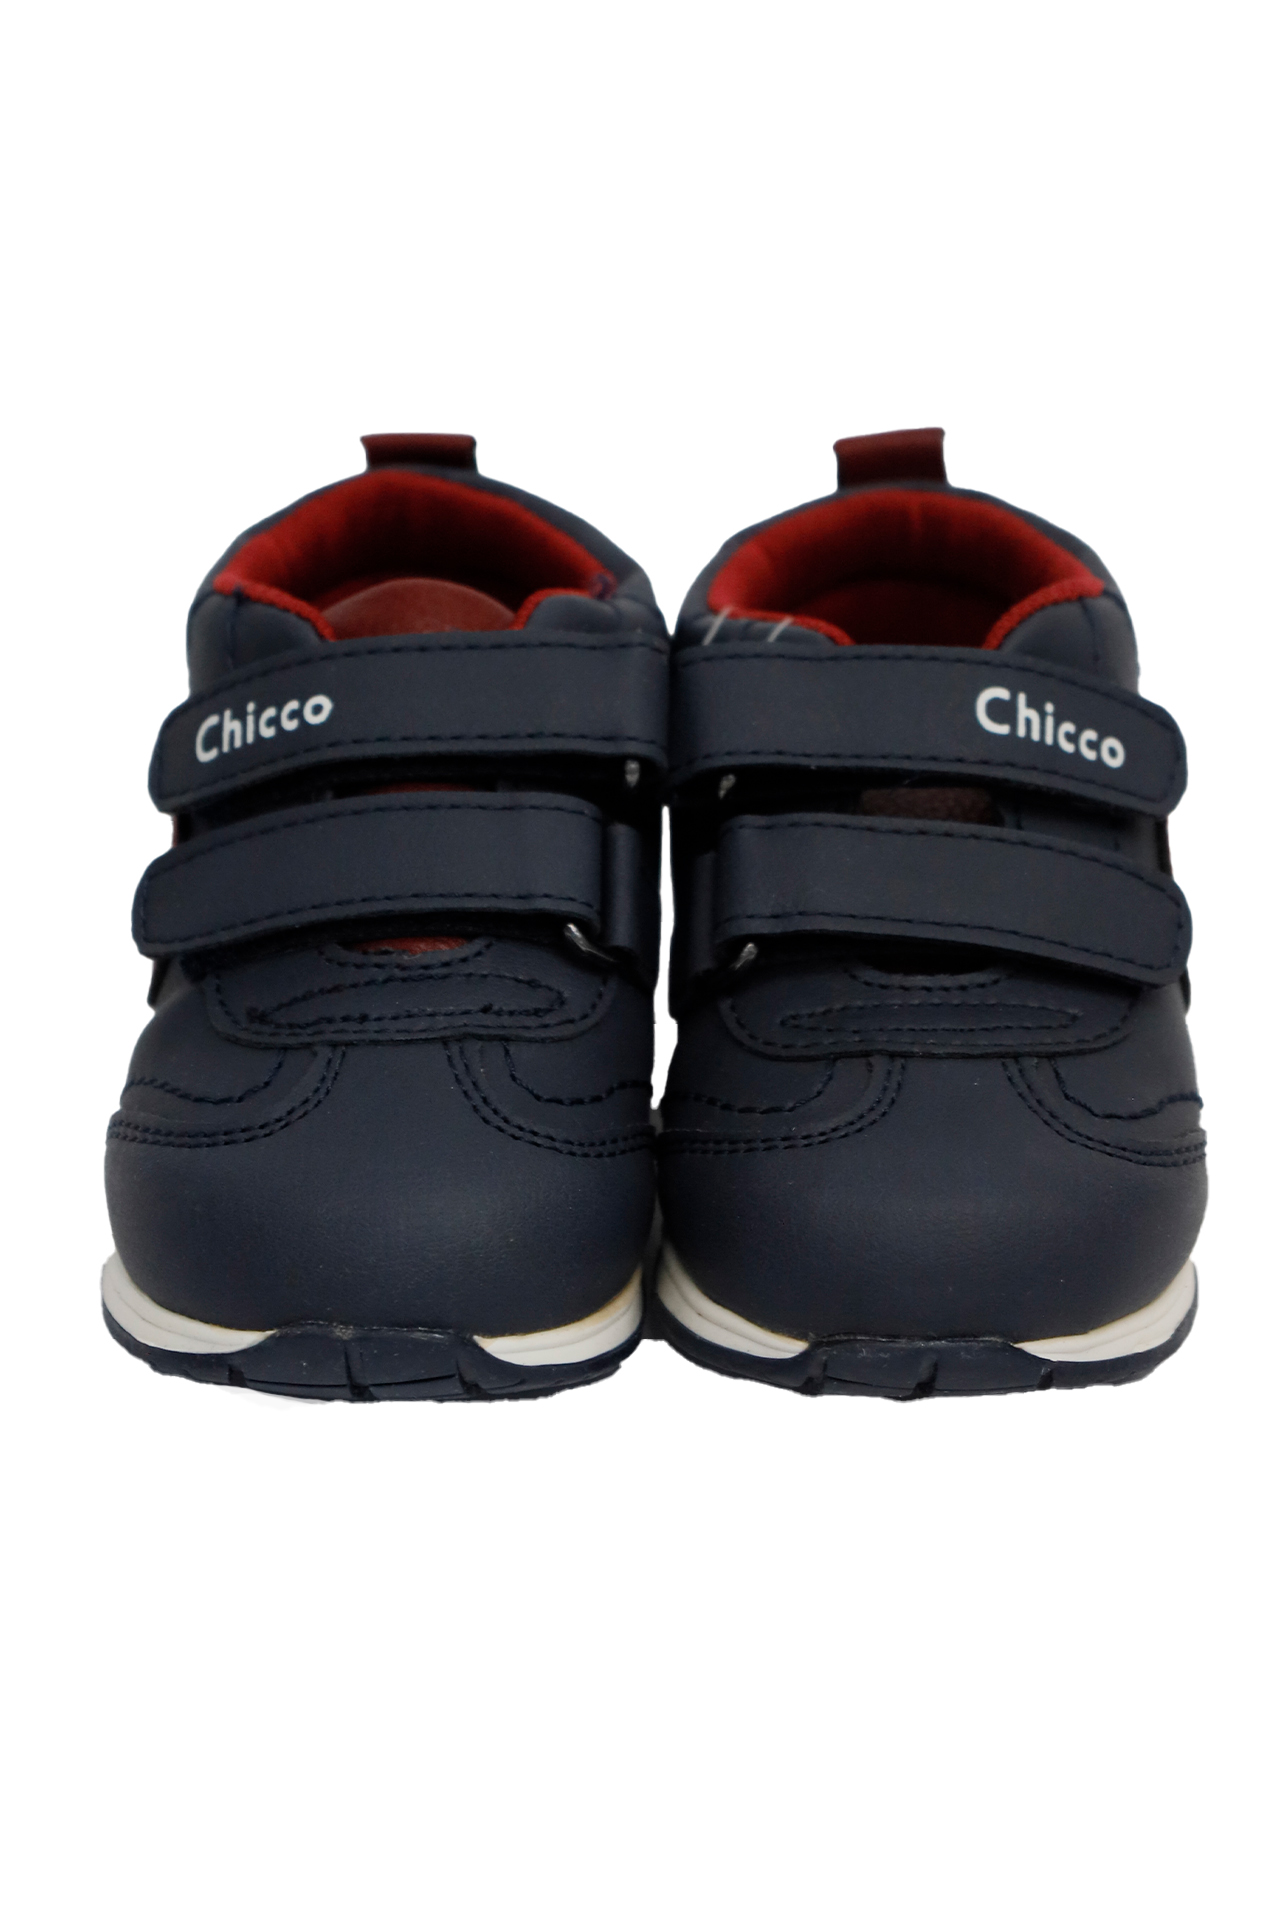 Chicco կոշիկ